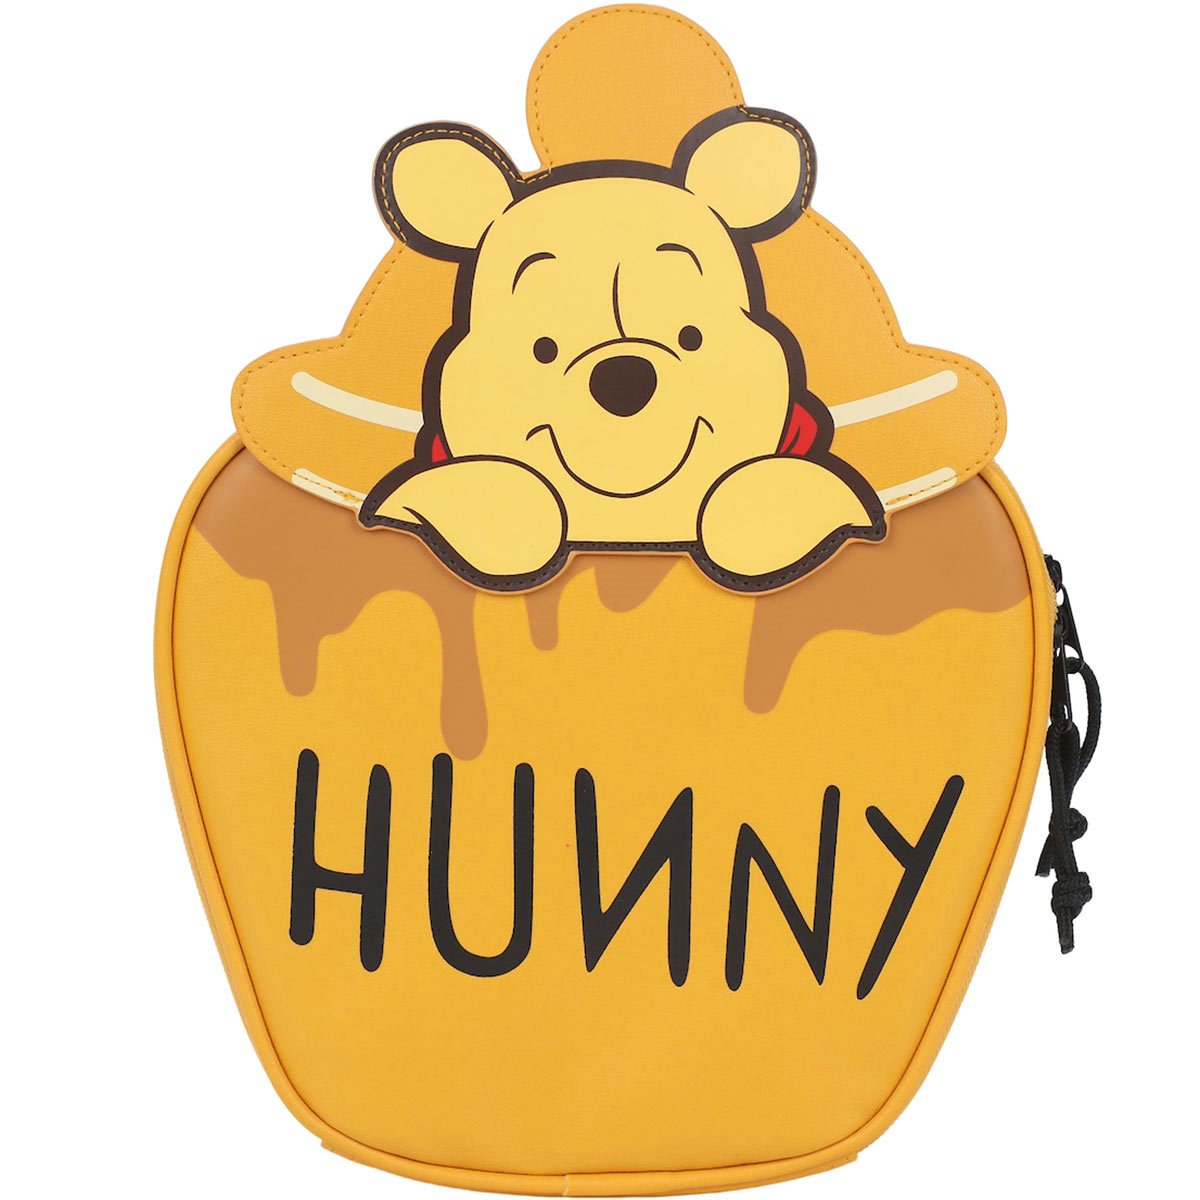 winnie the pooh honey pot